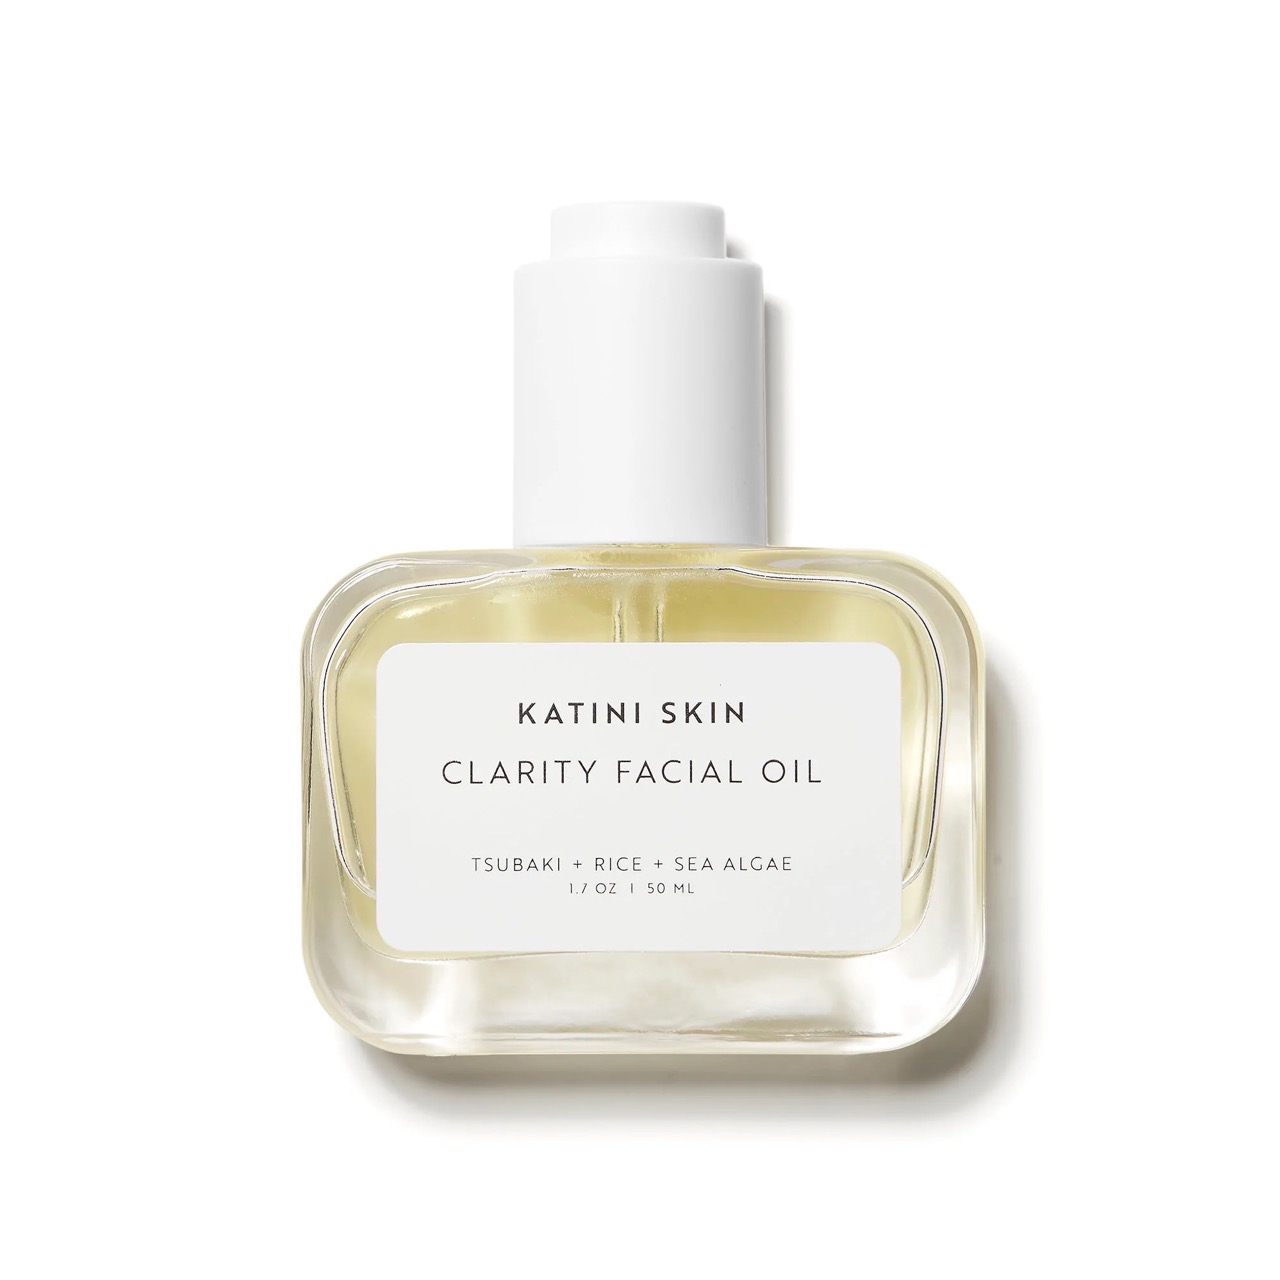 The Katini Skin Clarity Facial Oil.